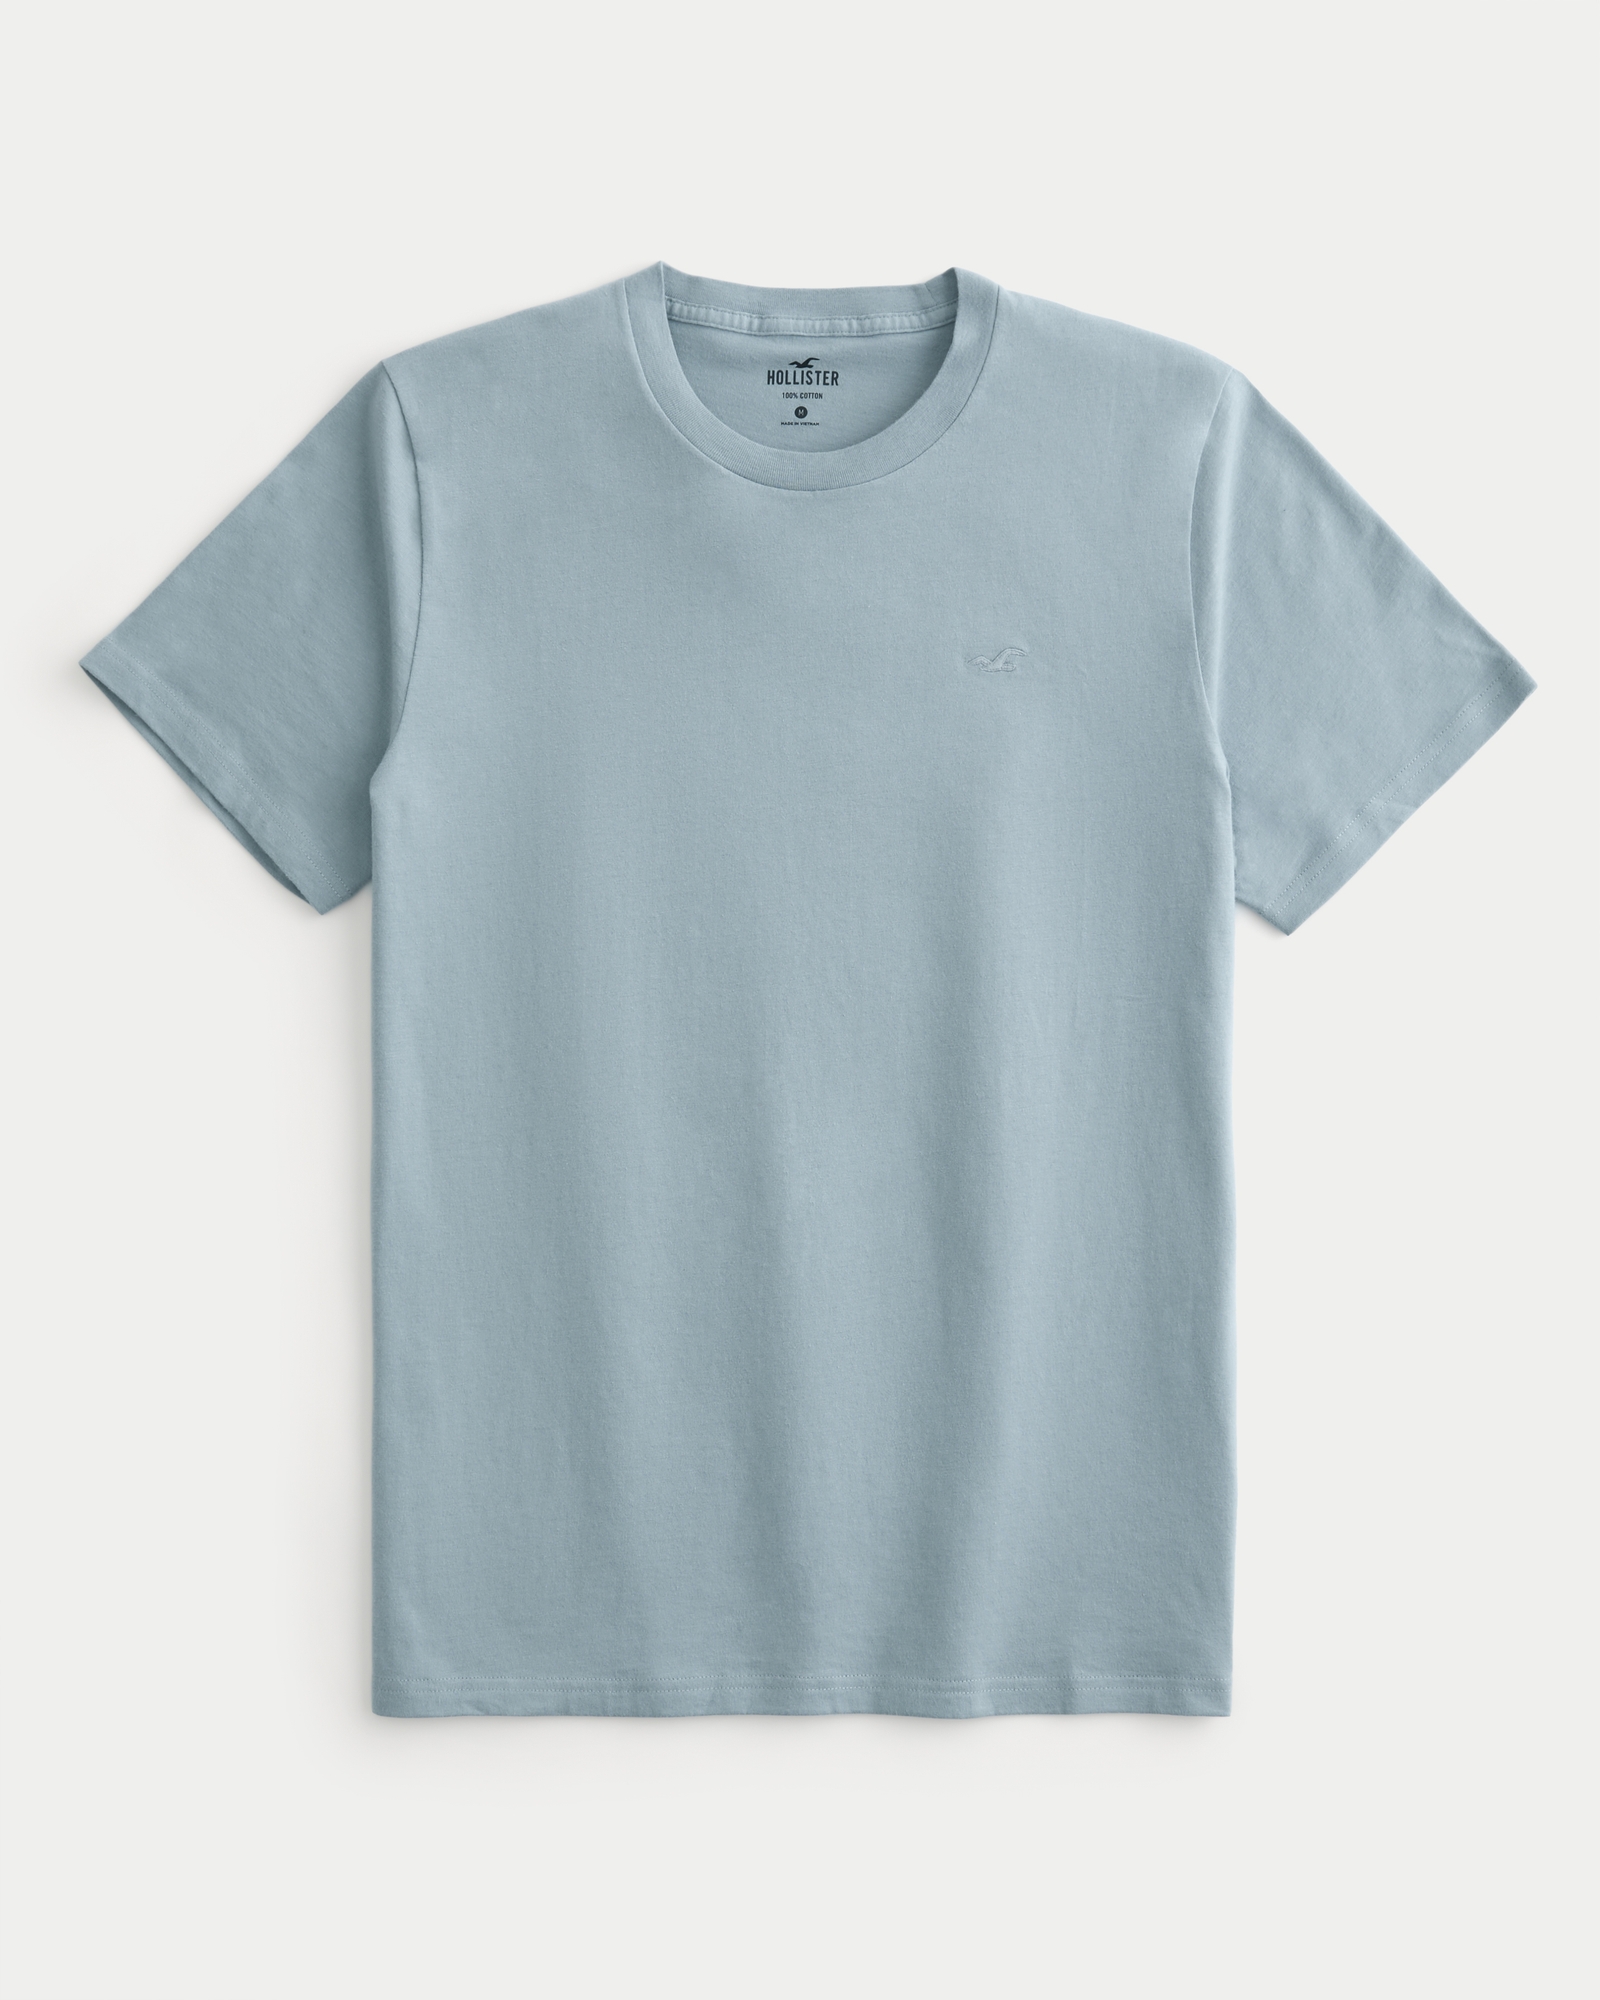 Hollister Graphic T-shirt Crew Neck Short Sleeve 100% cotton all